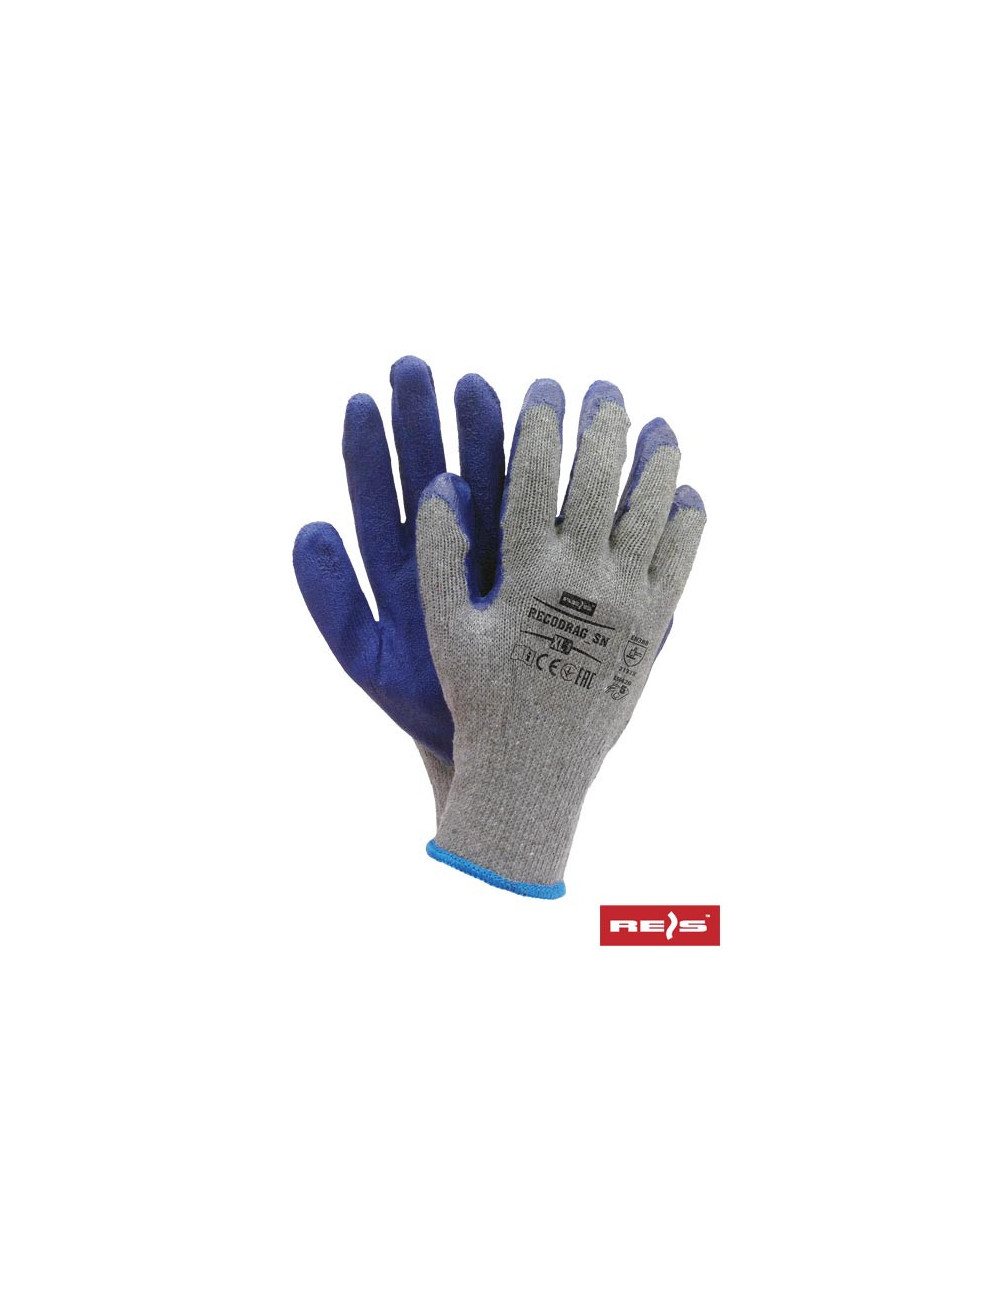 Protective gloves recodrag sn grey-blue Reis